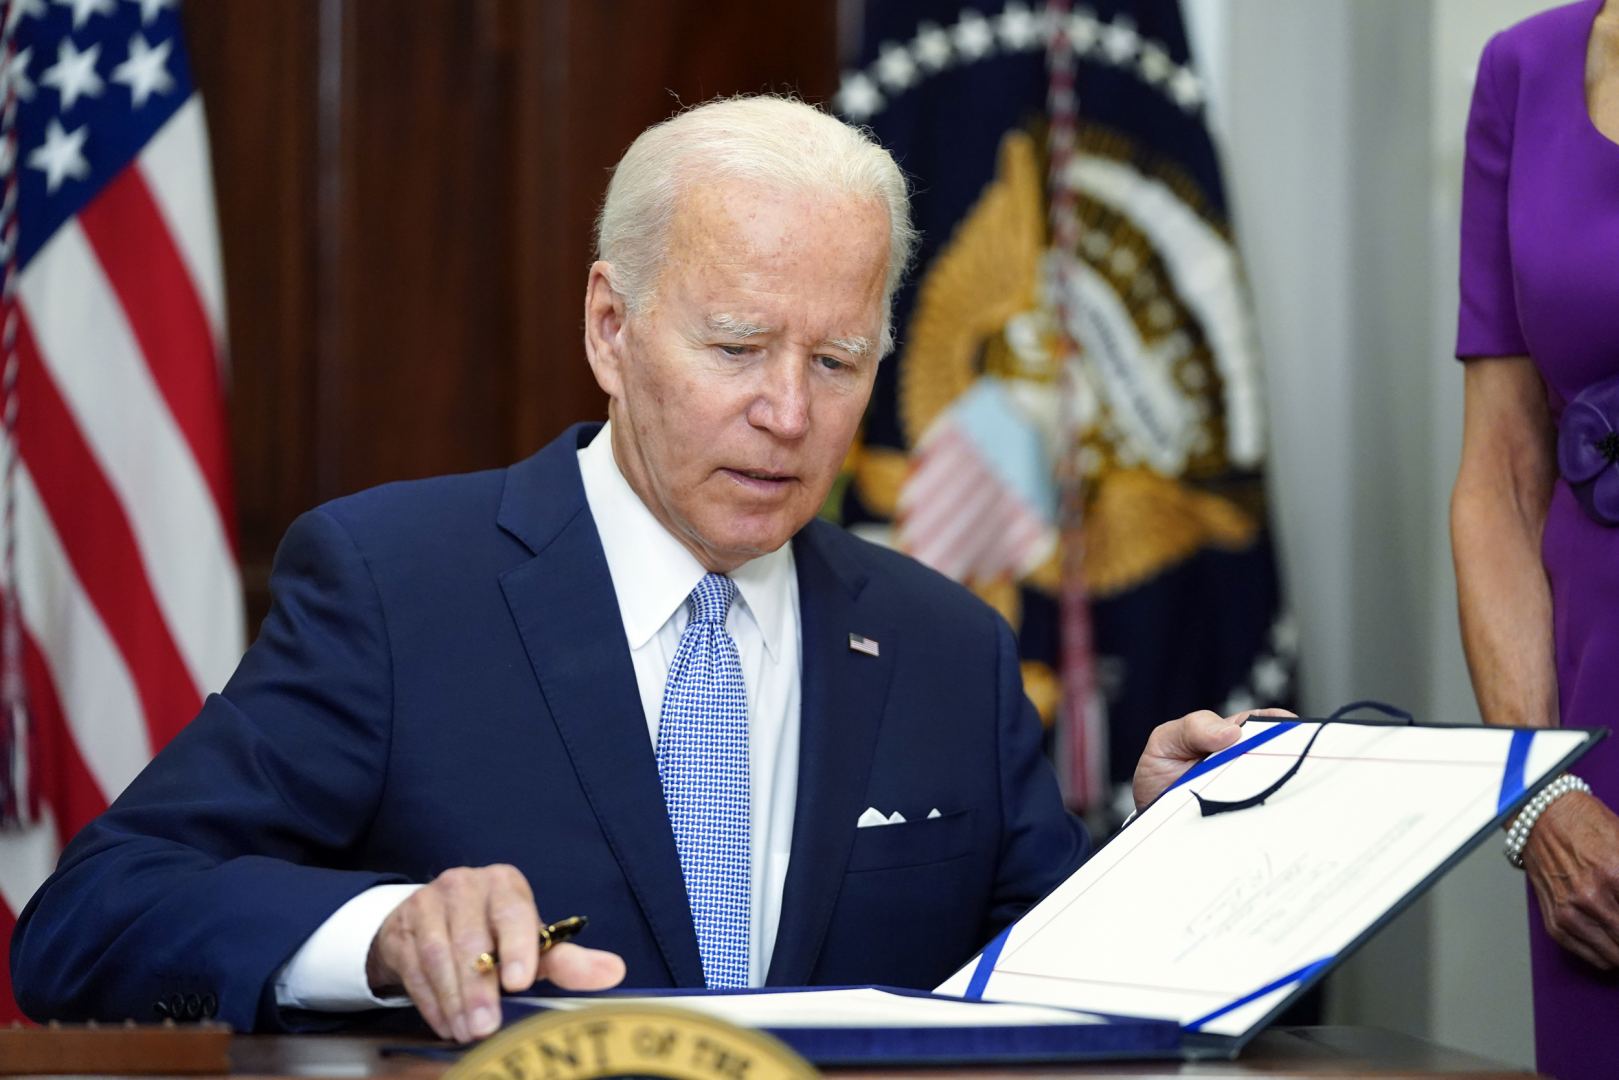 Biden signs Democratic bill on tax, health care, climate